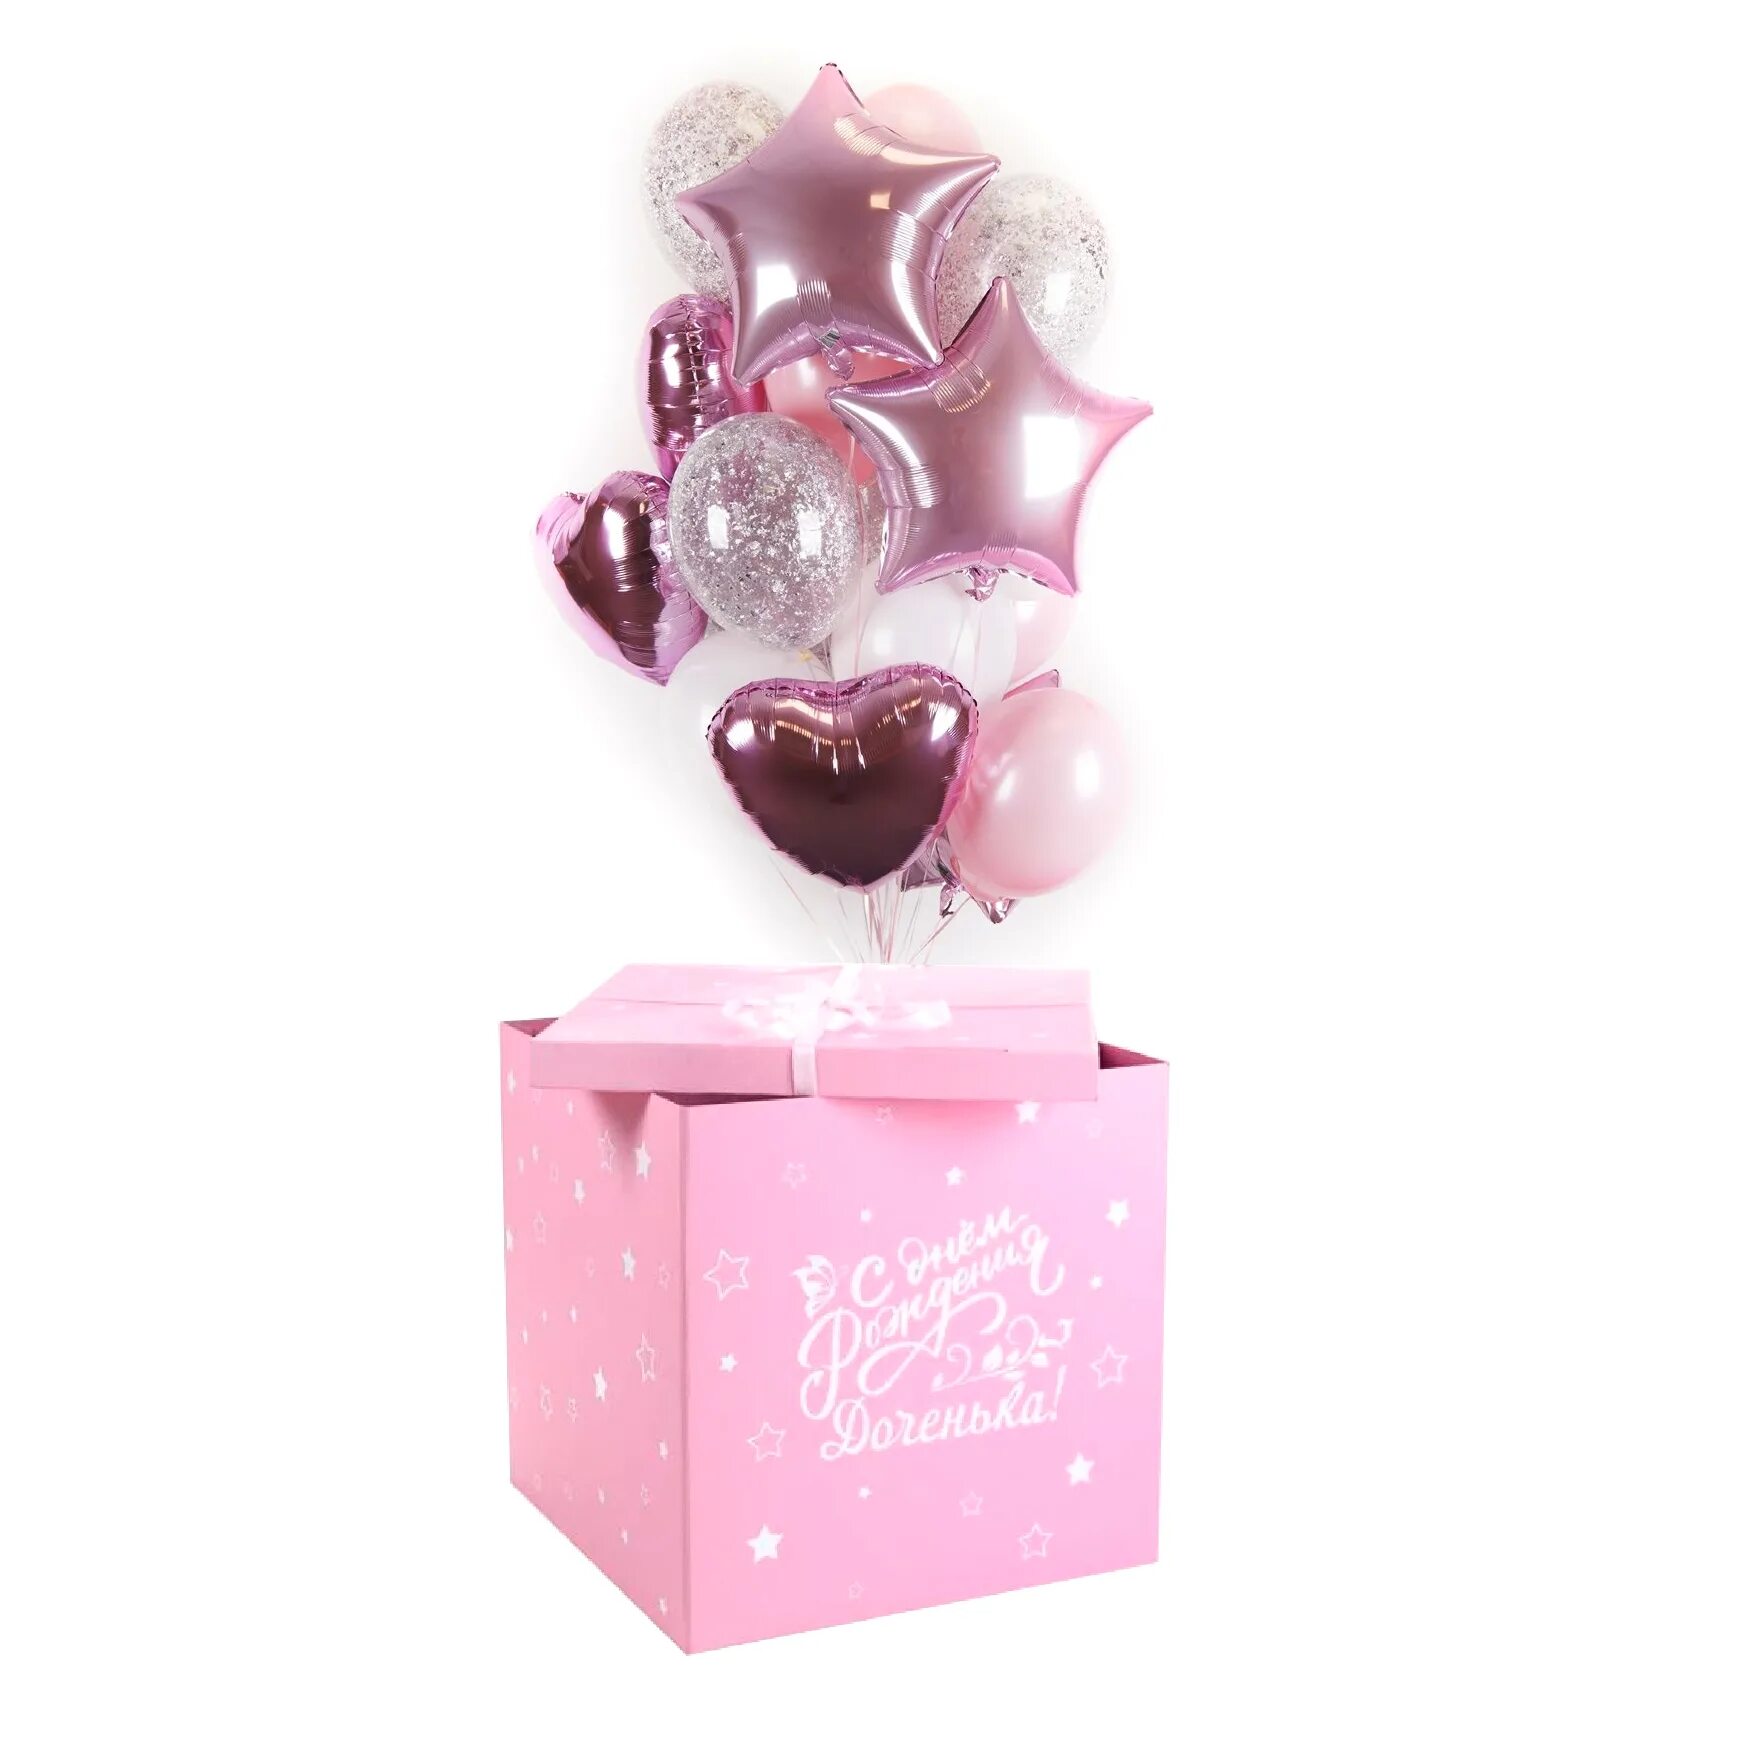 Коробка с шарами доставка. Коробка с шарами. Коробка с шарами для девочки. Коробка сюрприз с шарами для девочки. Розовая коробка сюрприз с шарами.